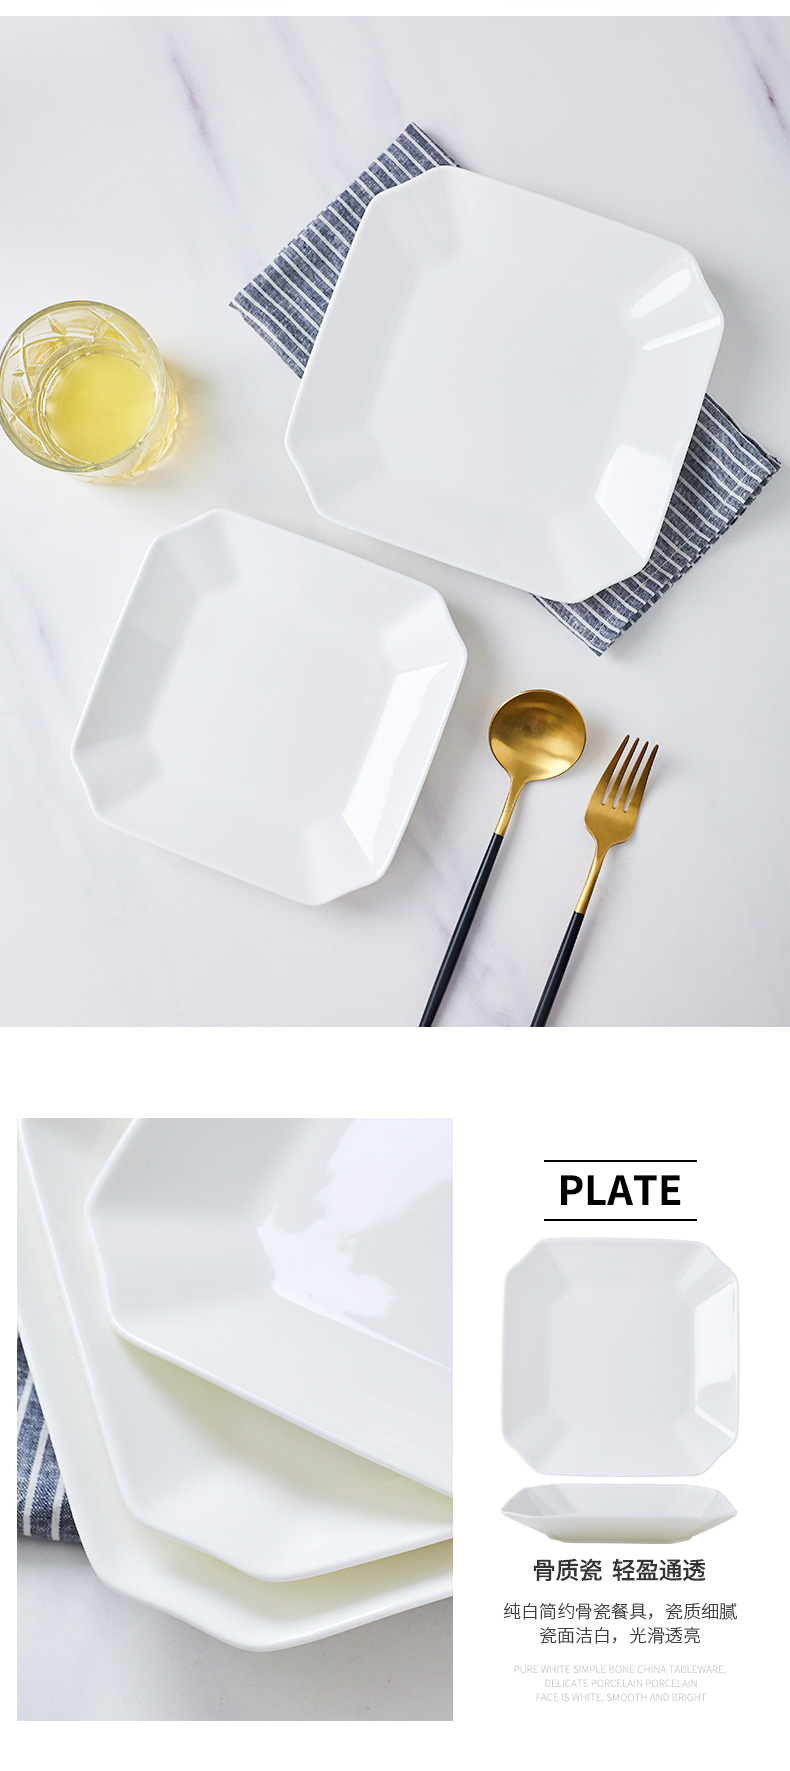 The new jingdezhen domestic ipads porcelain plate dish plate deep dish side dish dish pure white ceramic plate deep dish